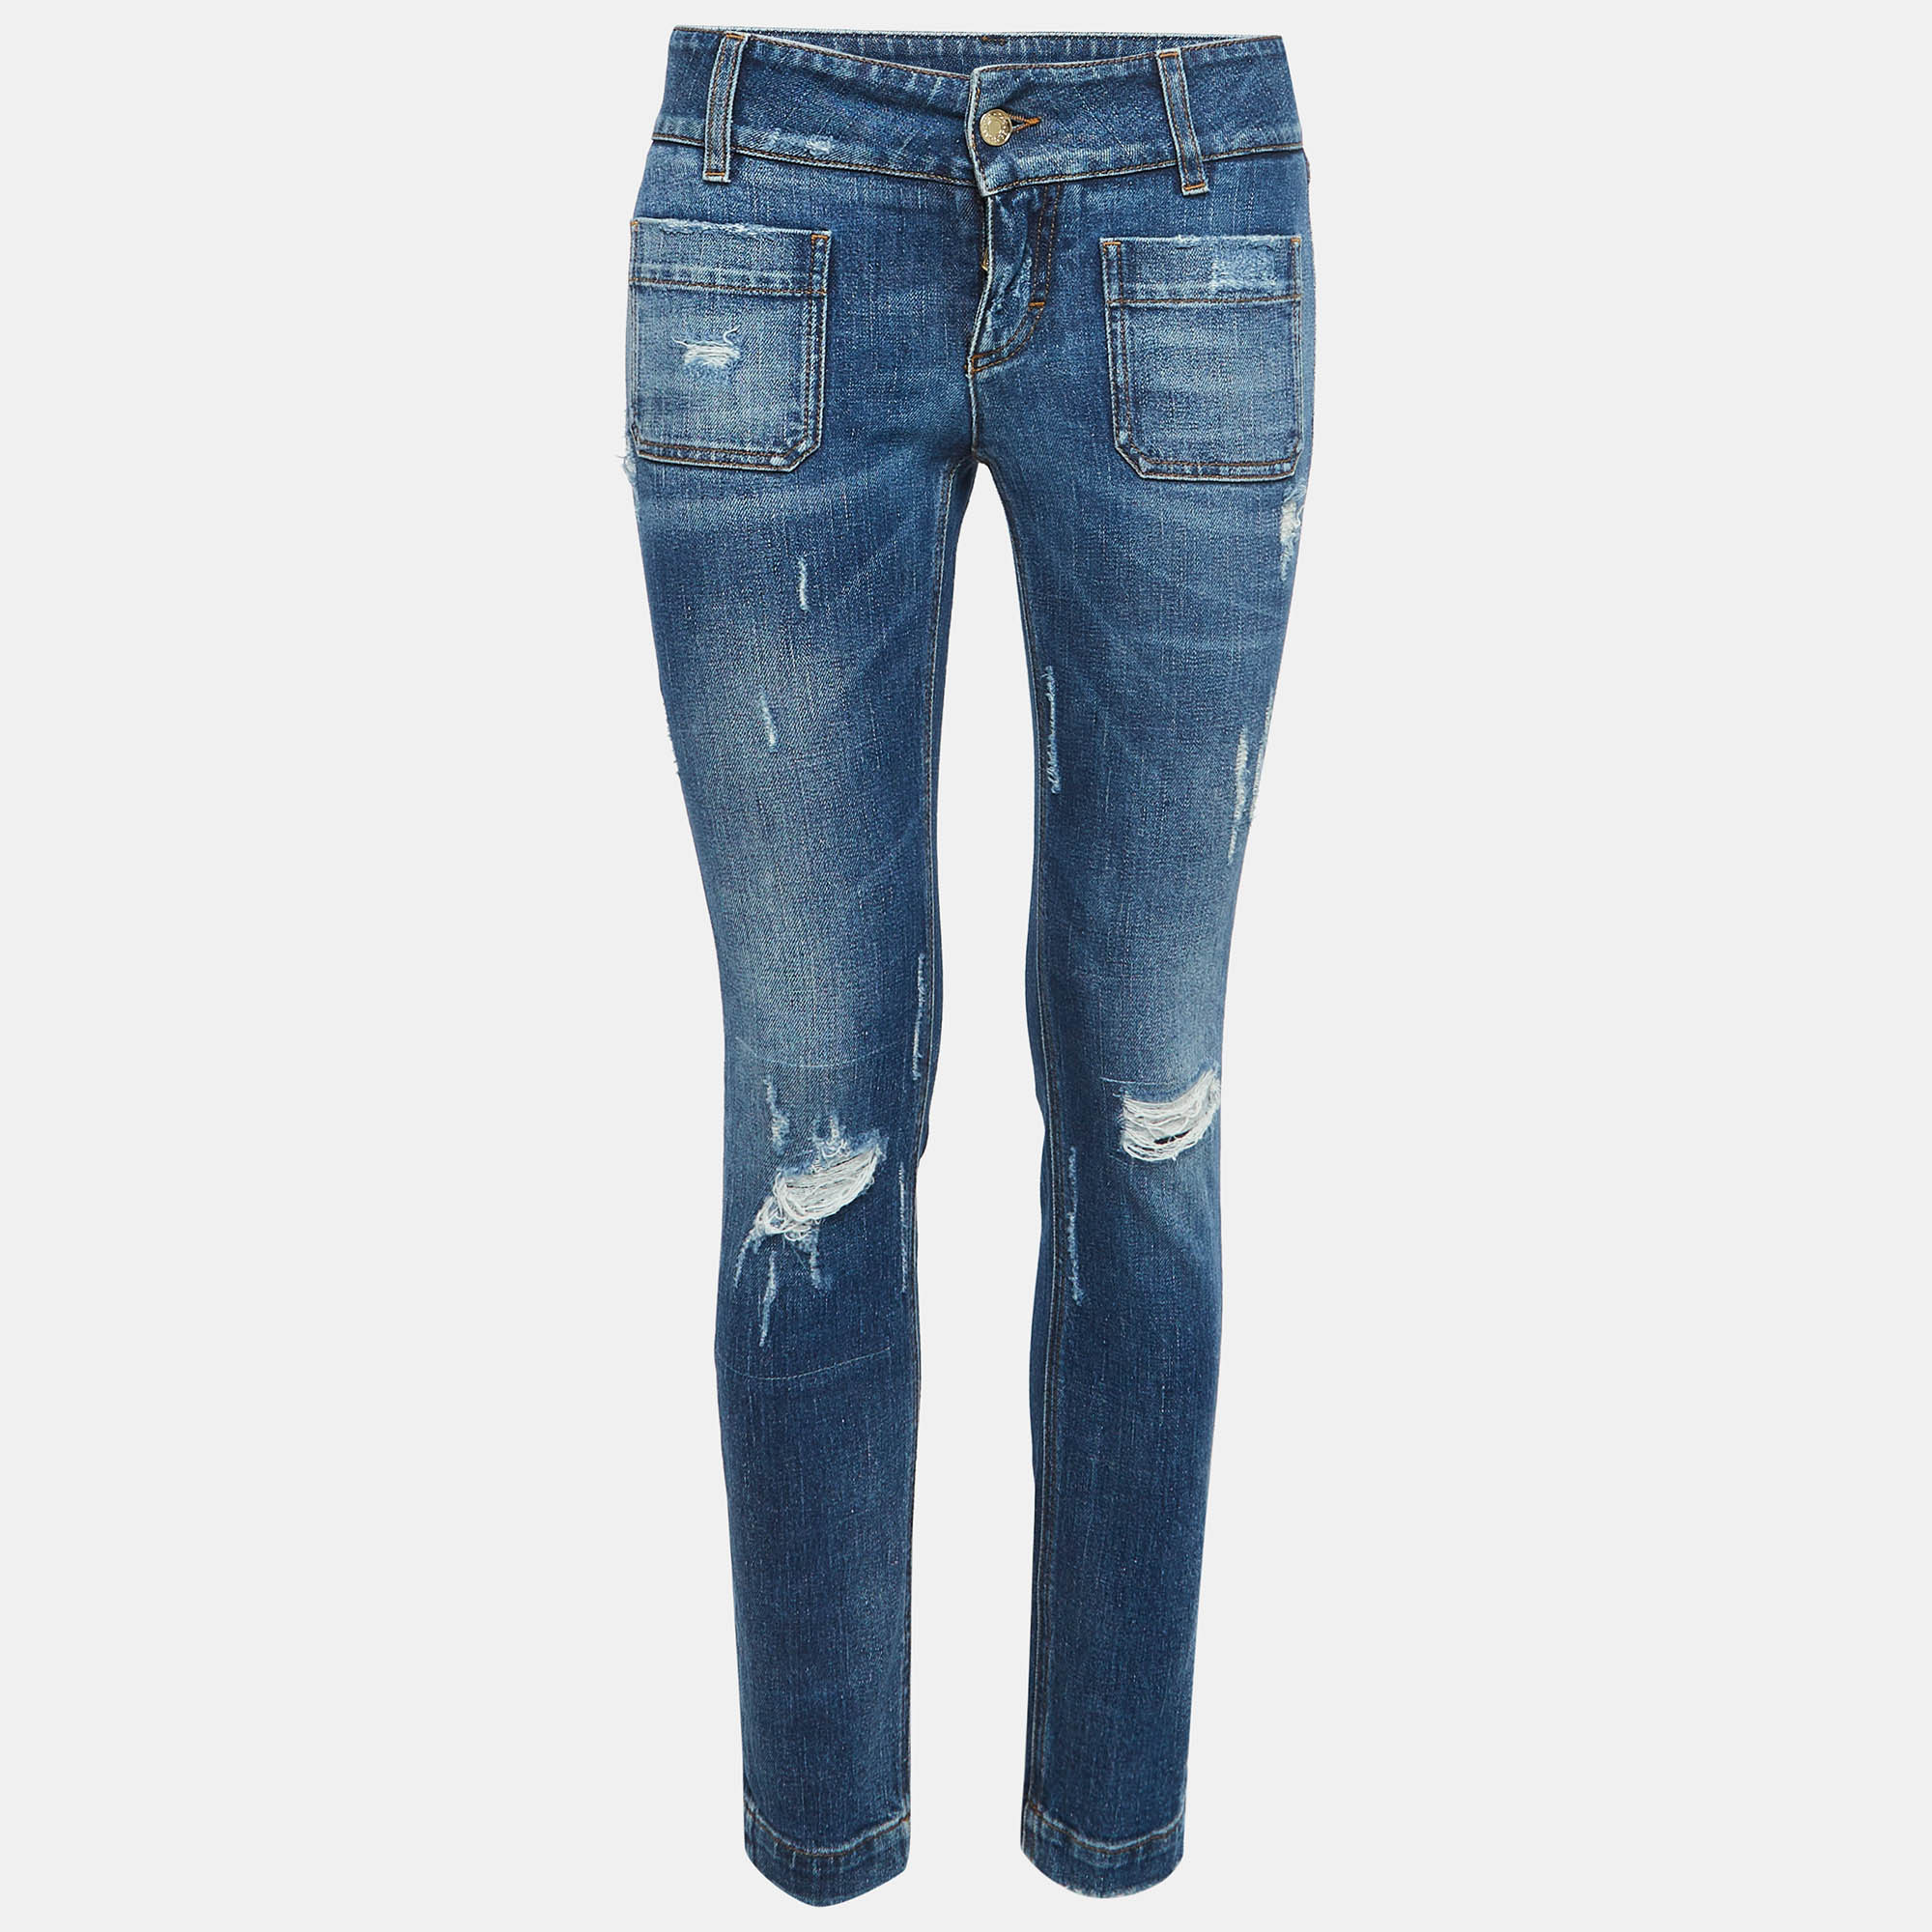 

Dolce & Gabbana Blue Washed Denim Distressed Jeans S Waist 28"